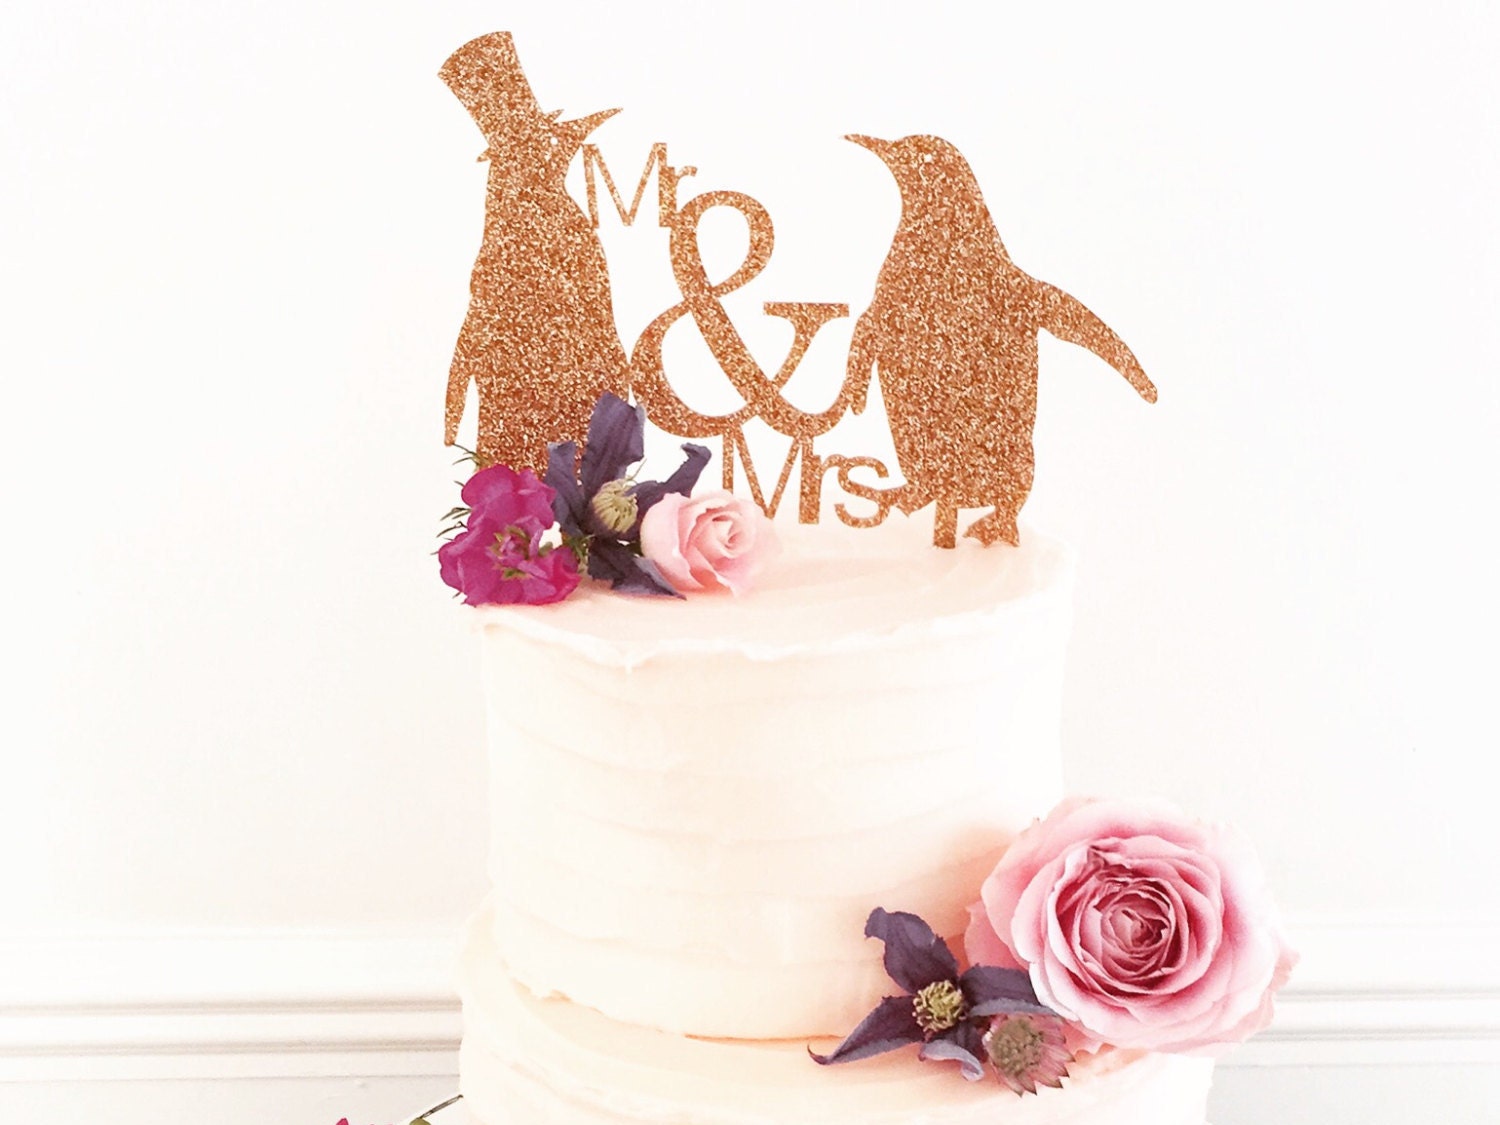 Mr And Mrs Penguin Wedding Cake Topper Medium Size-wedding cake decoration-penguin themed wedding cake-wedding accessories-